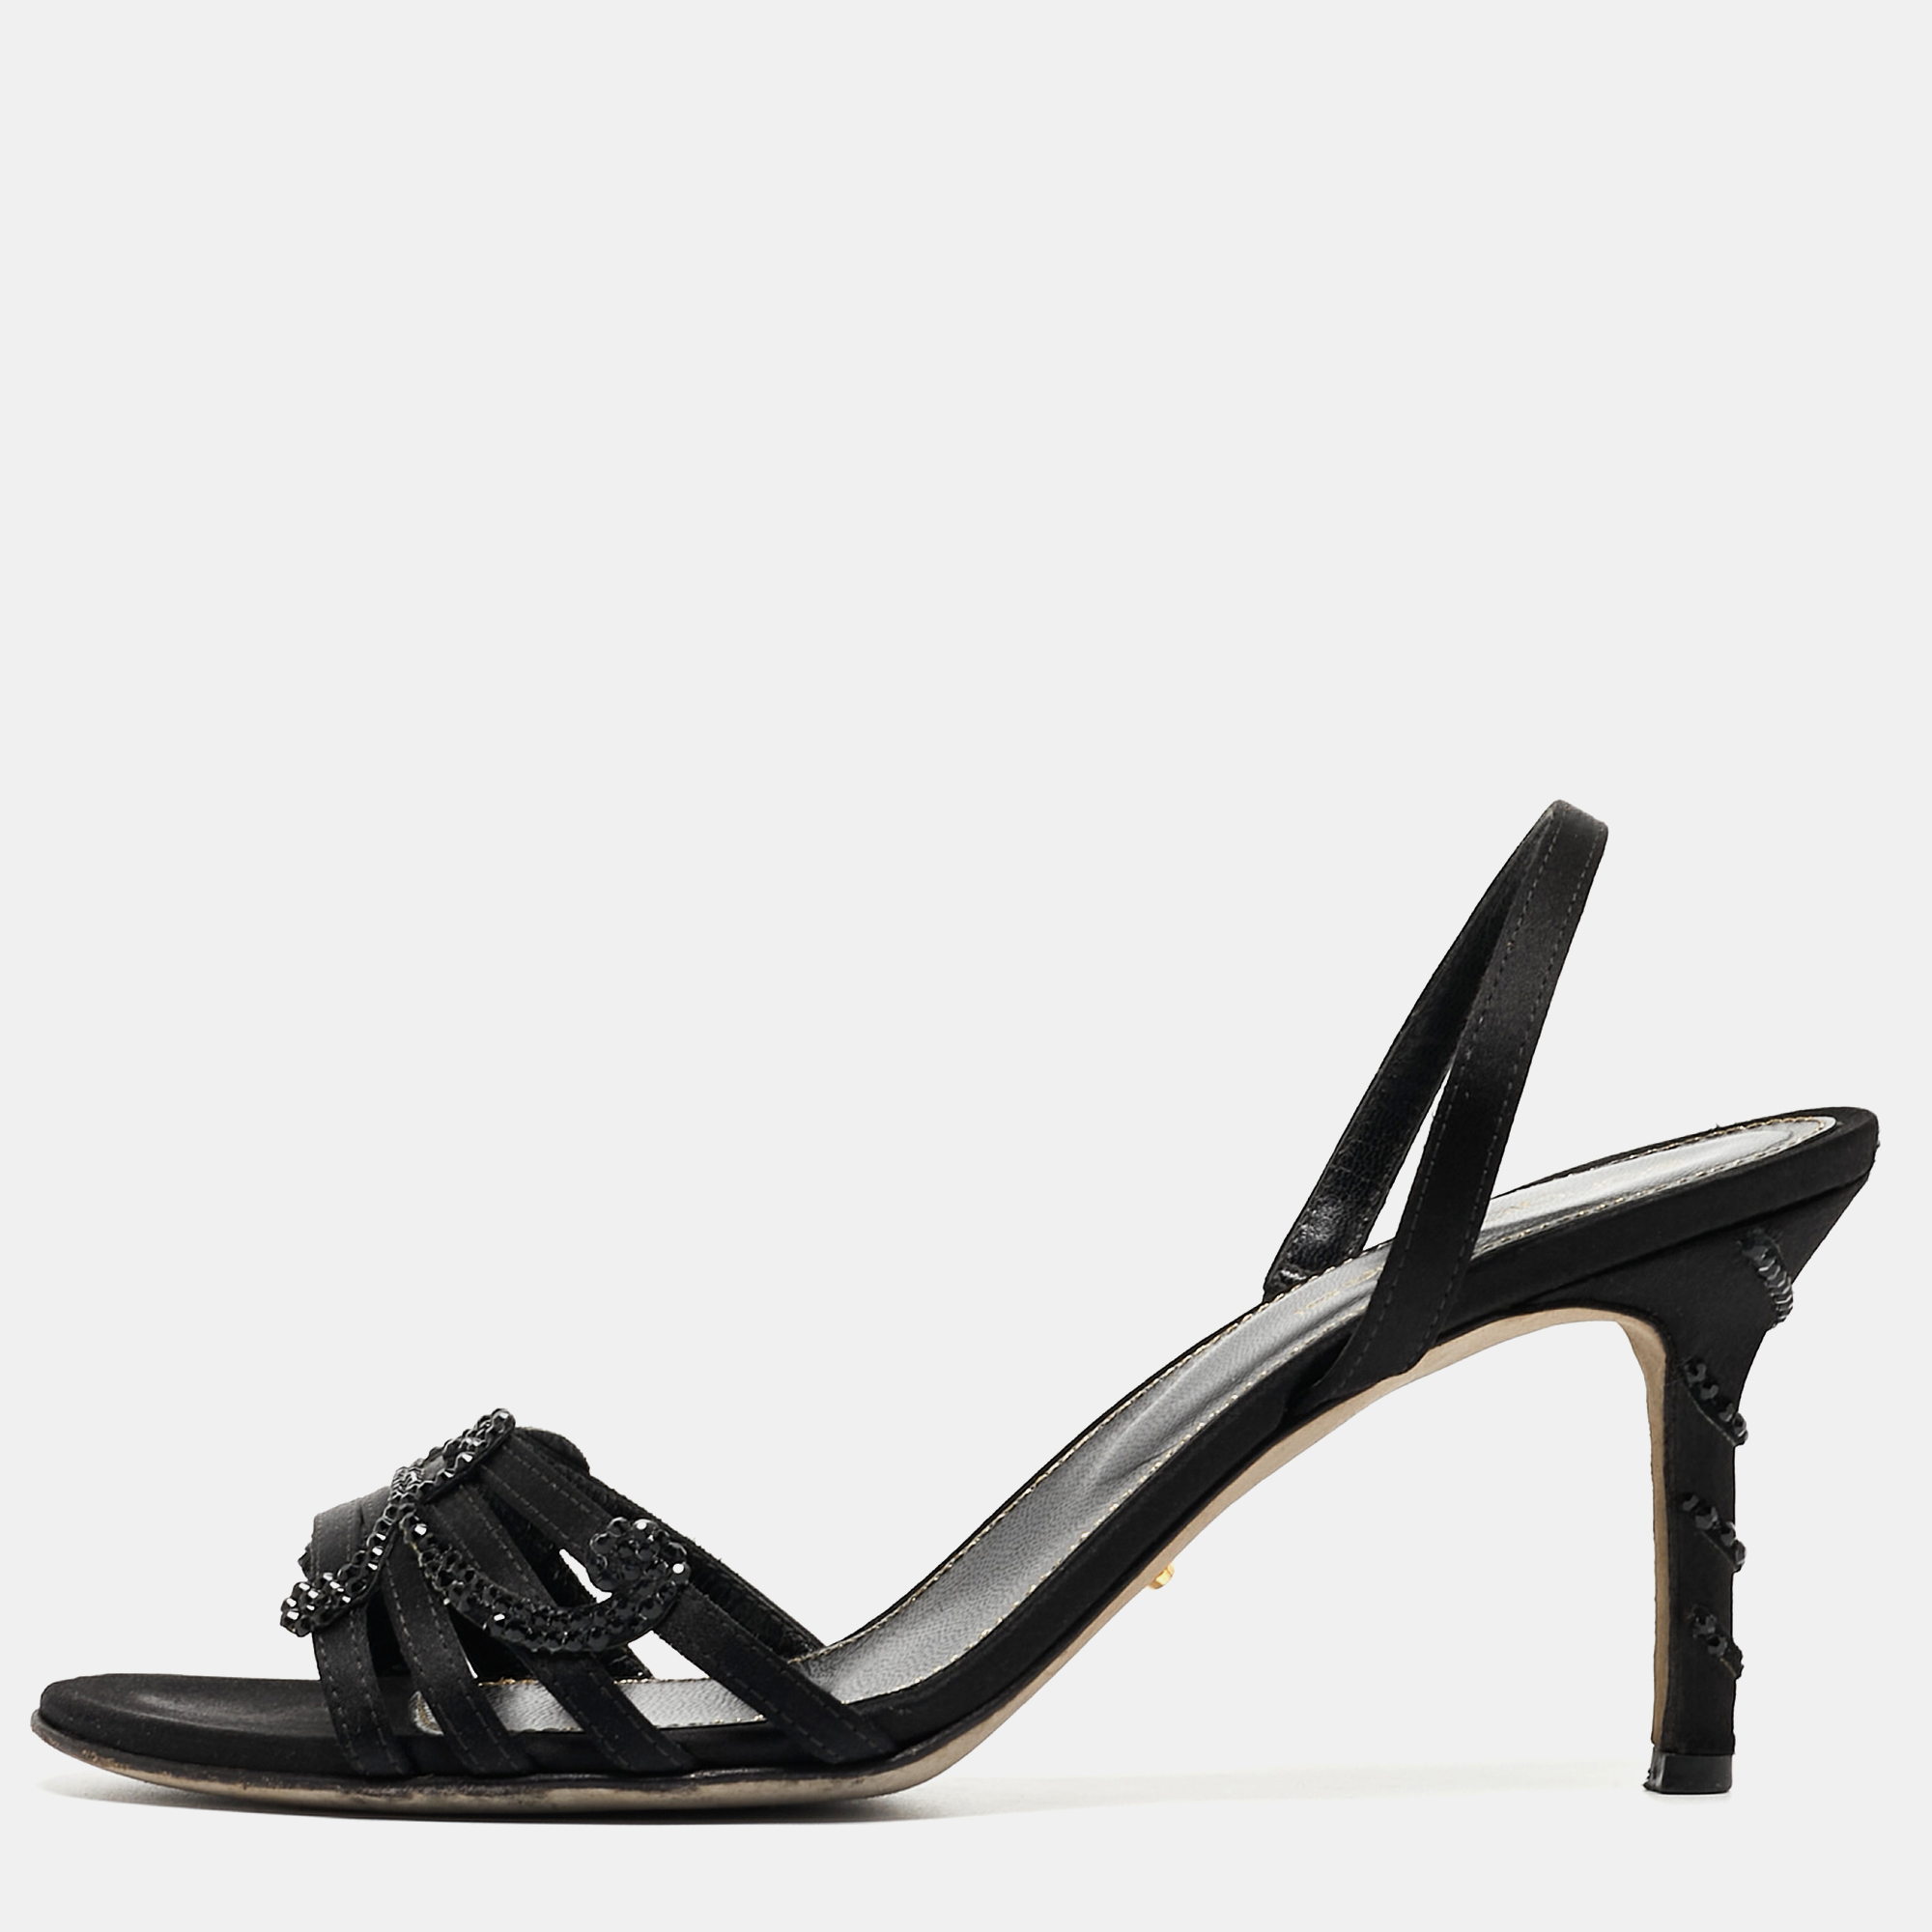 Pre-owned Sergio Rossi Black Satin Embellished Sandals Size 36.5